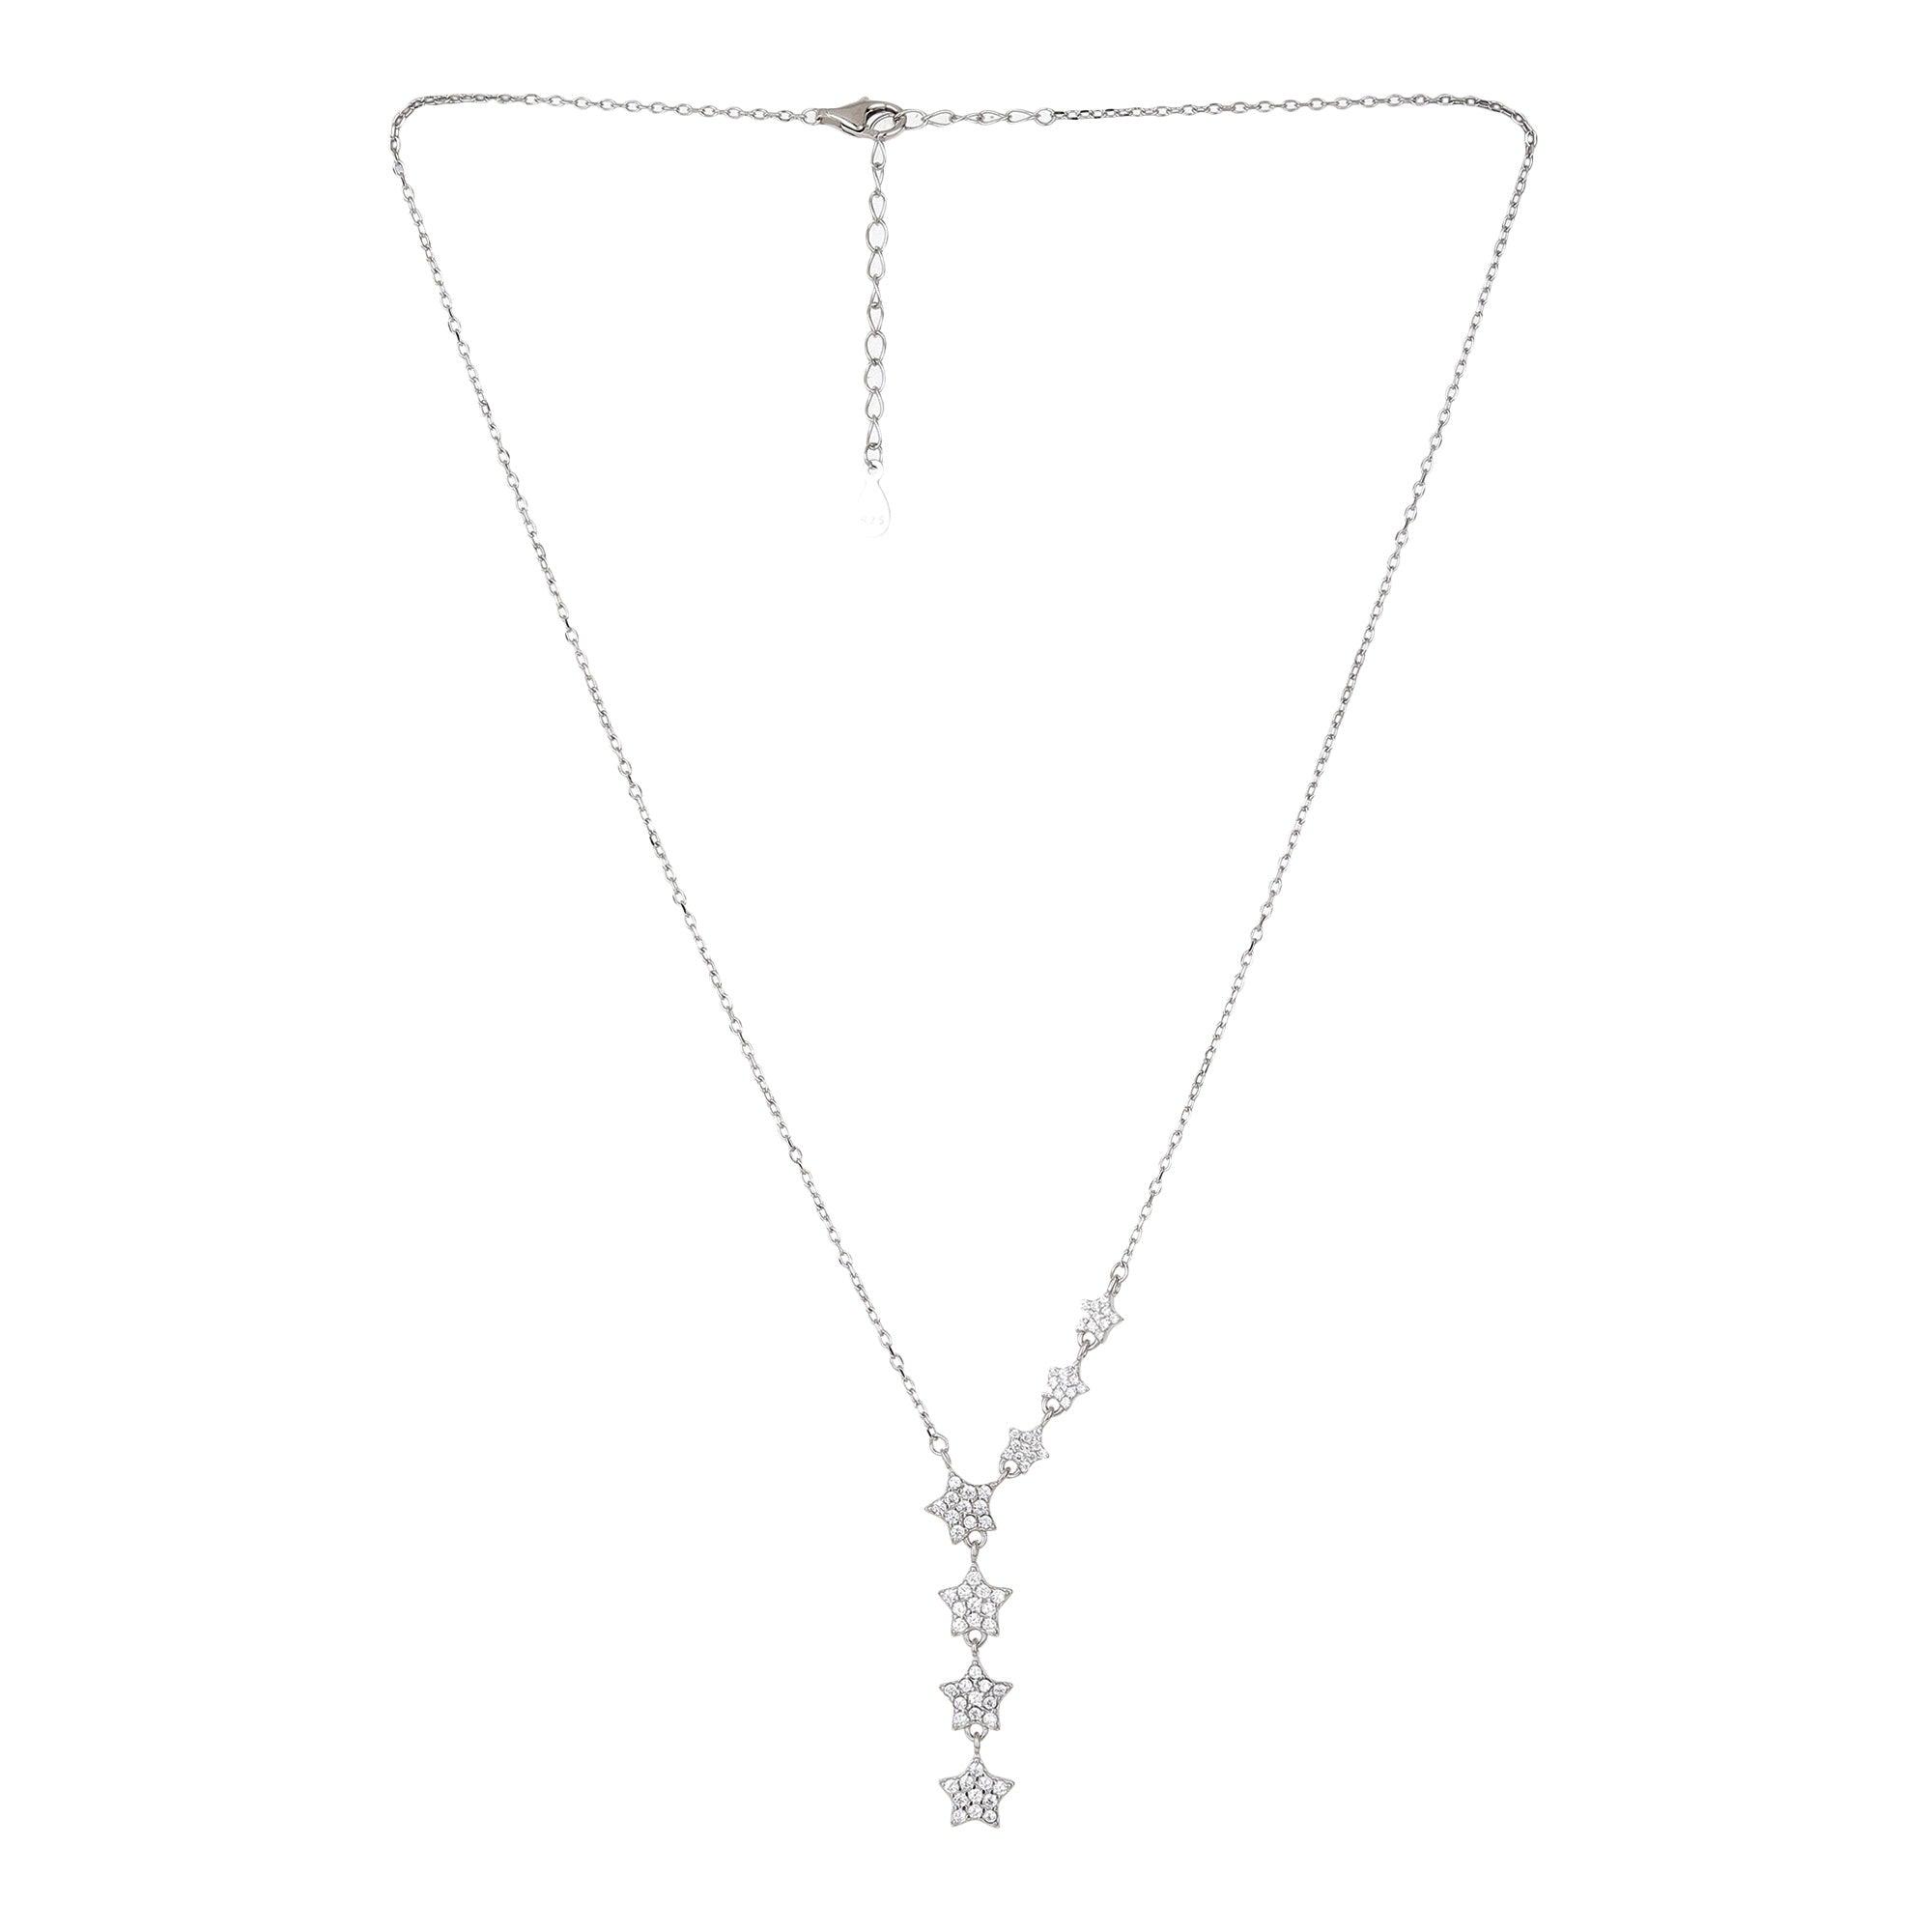 Seven Classy Silver Star Necklaces - silvermark